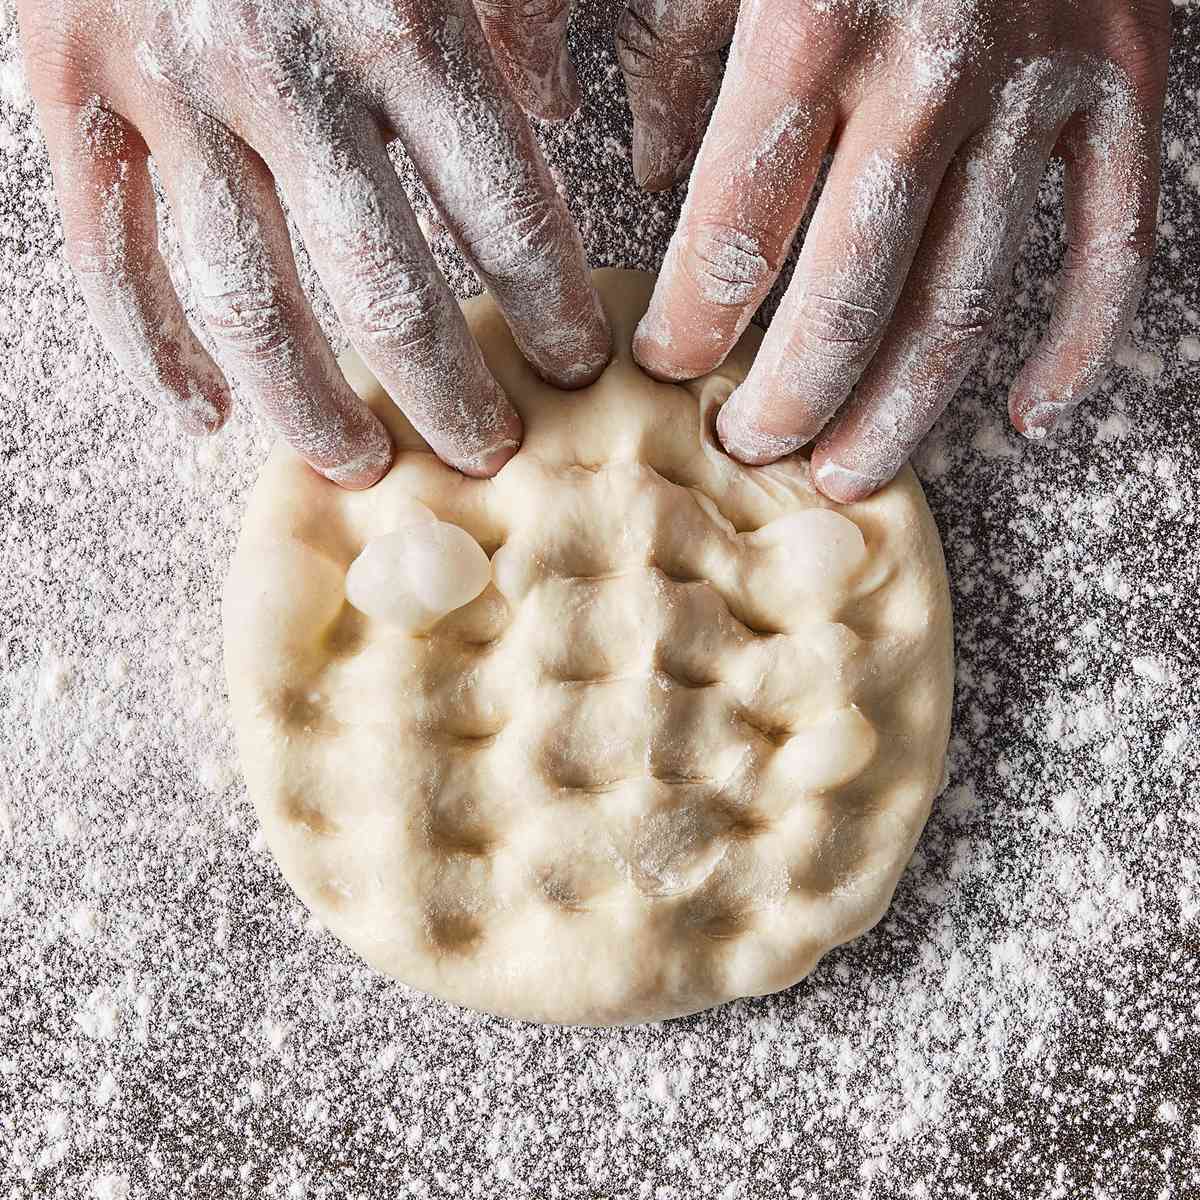 fingers docking pizza dough